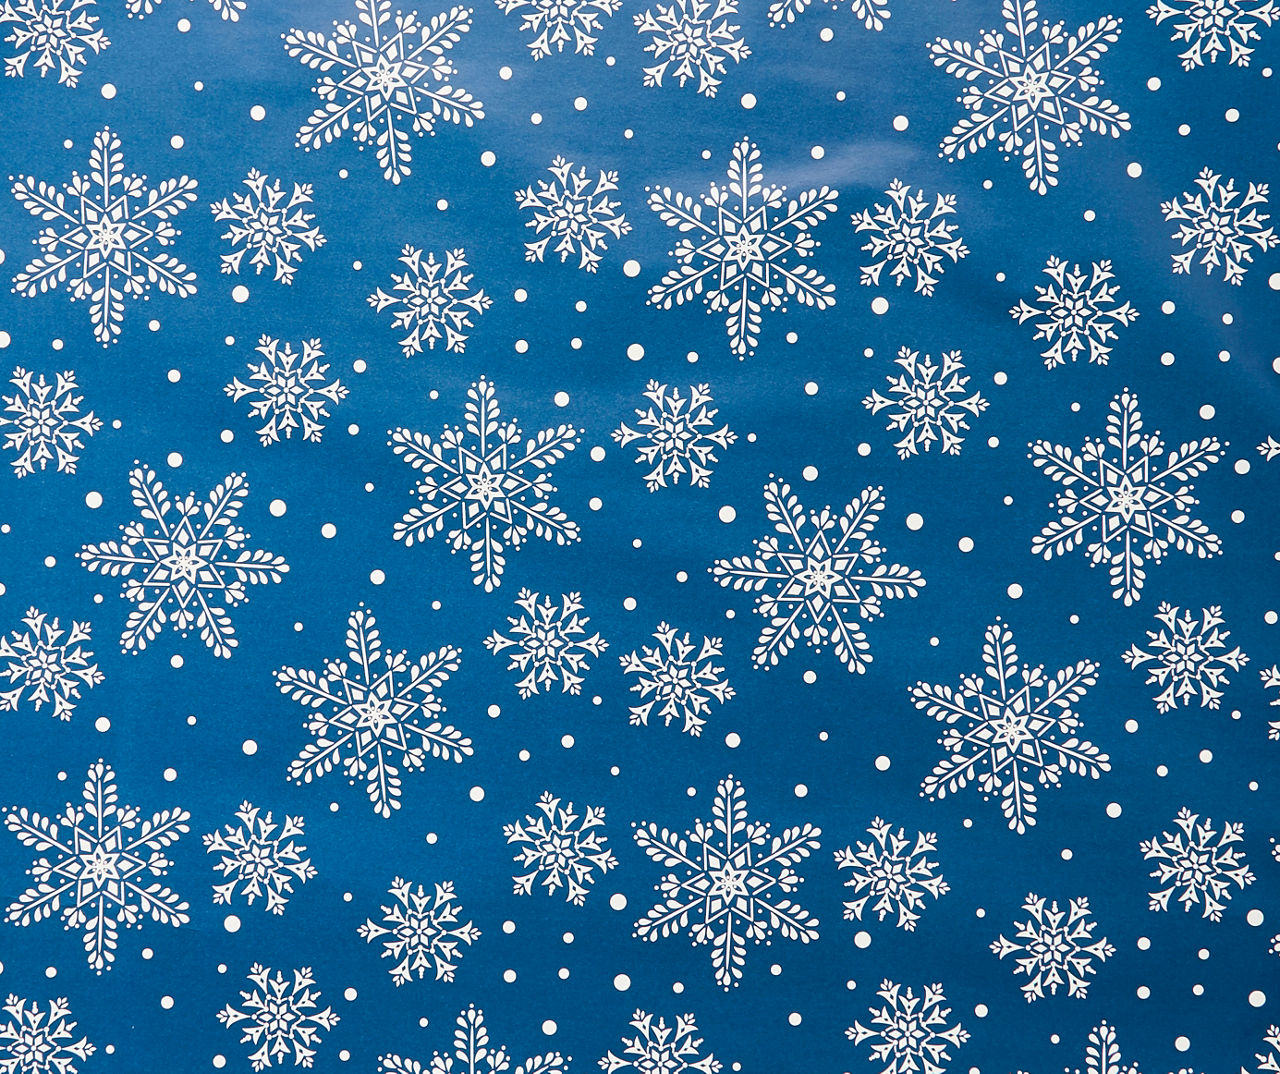 Winter Wonder Lane Rustic Holiday Mega Kraft Wrapping Paper Roll